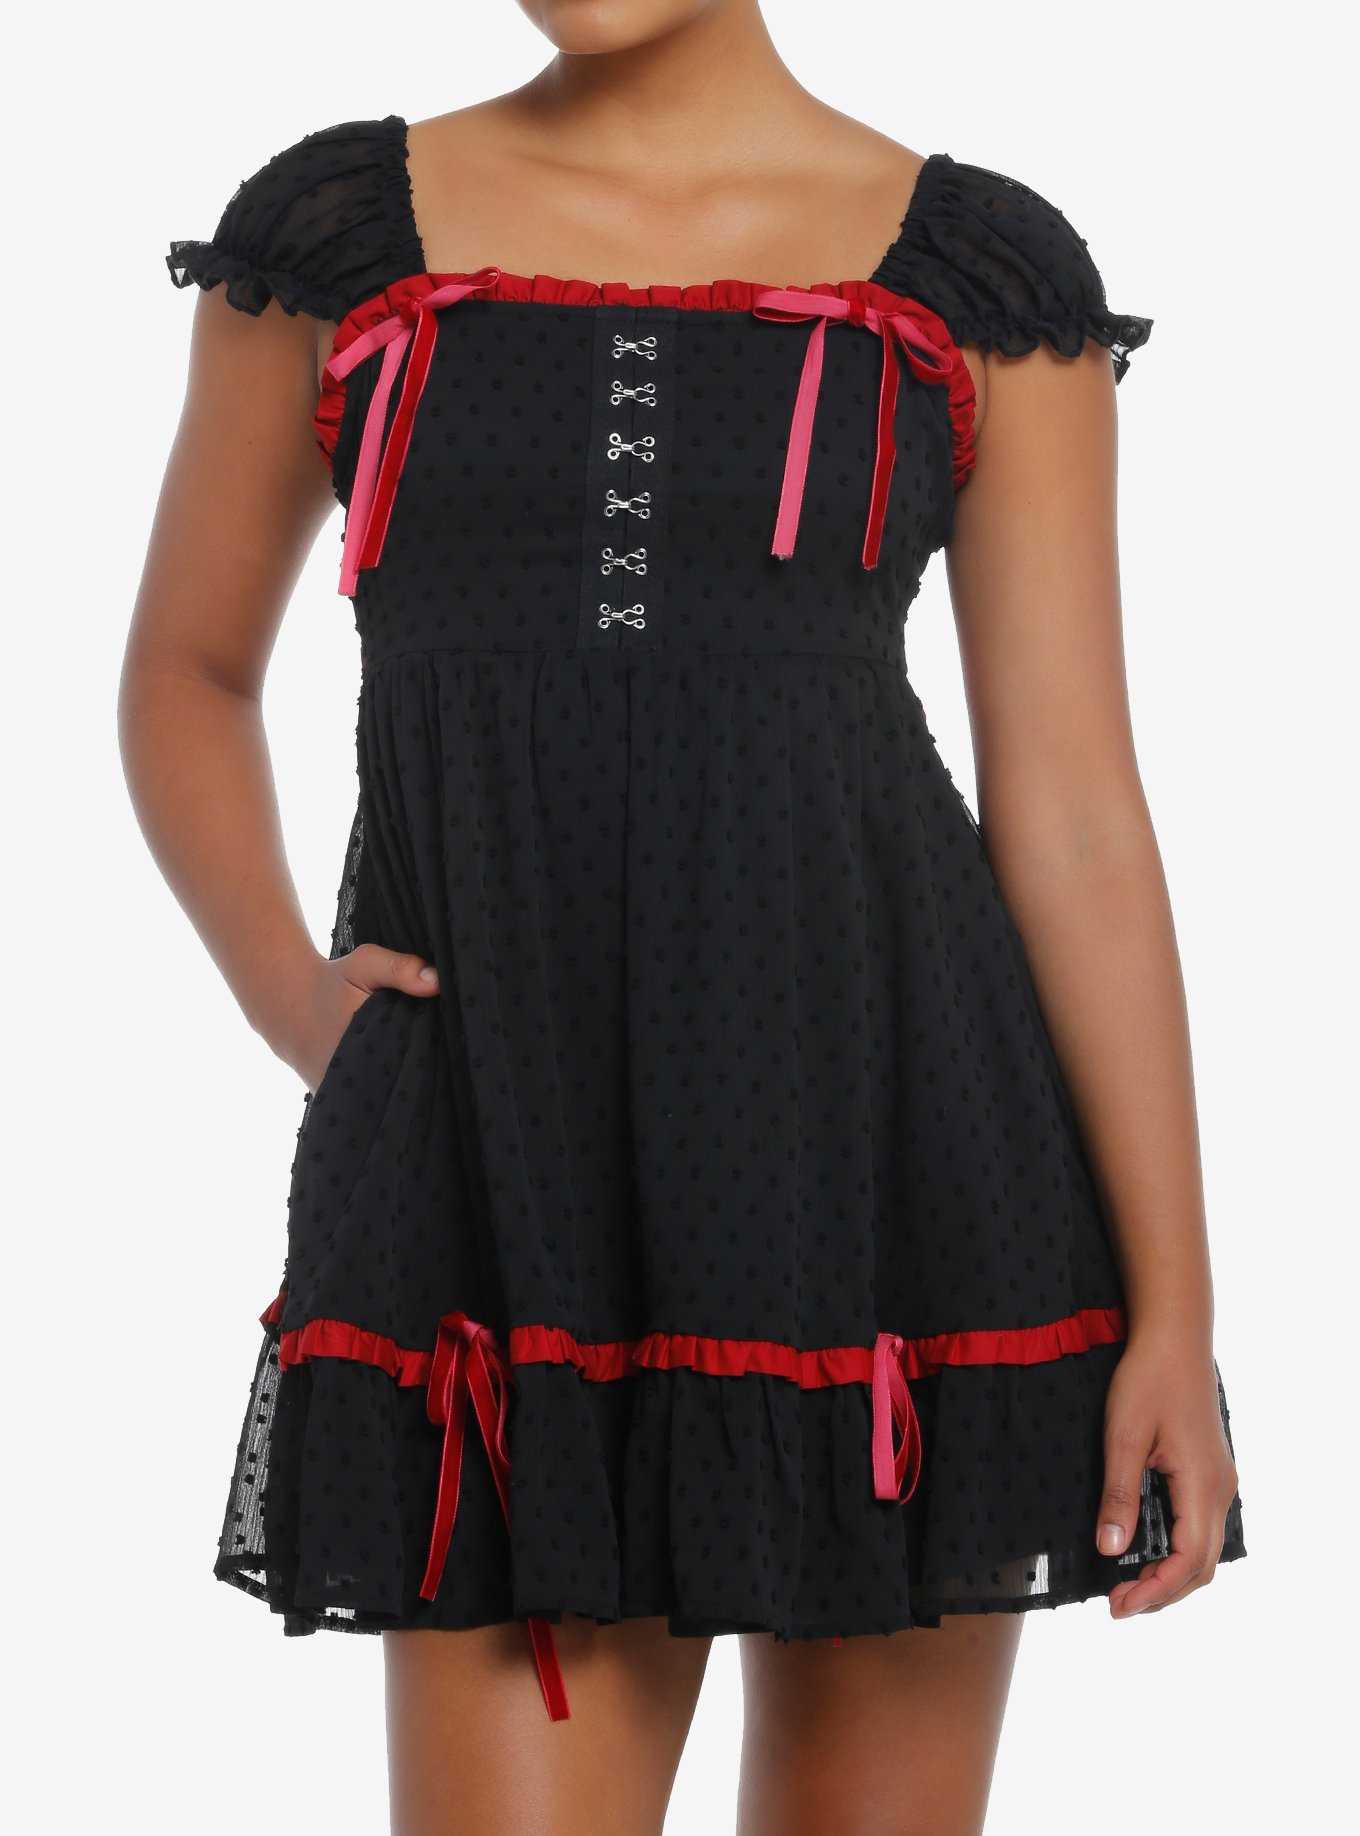 Social Collision Black & Red Bows Ruffle Mini Dress, , hi-res